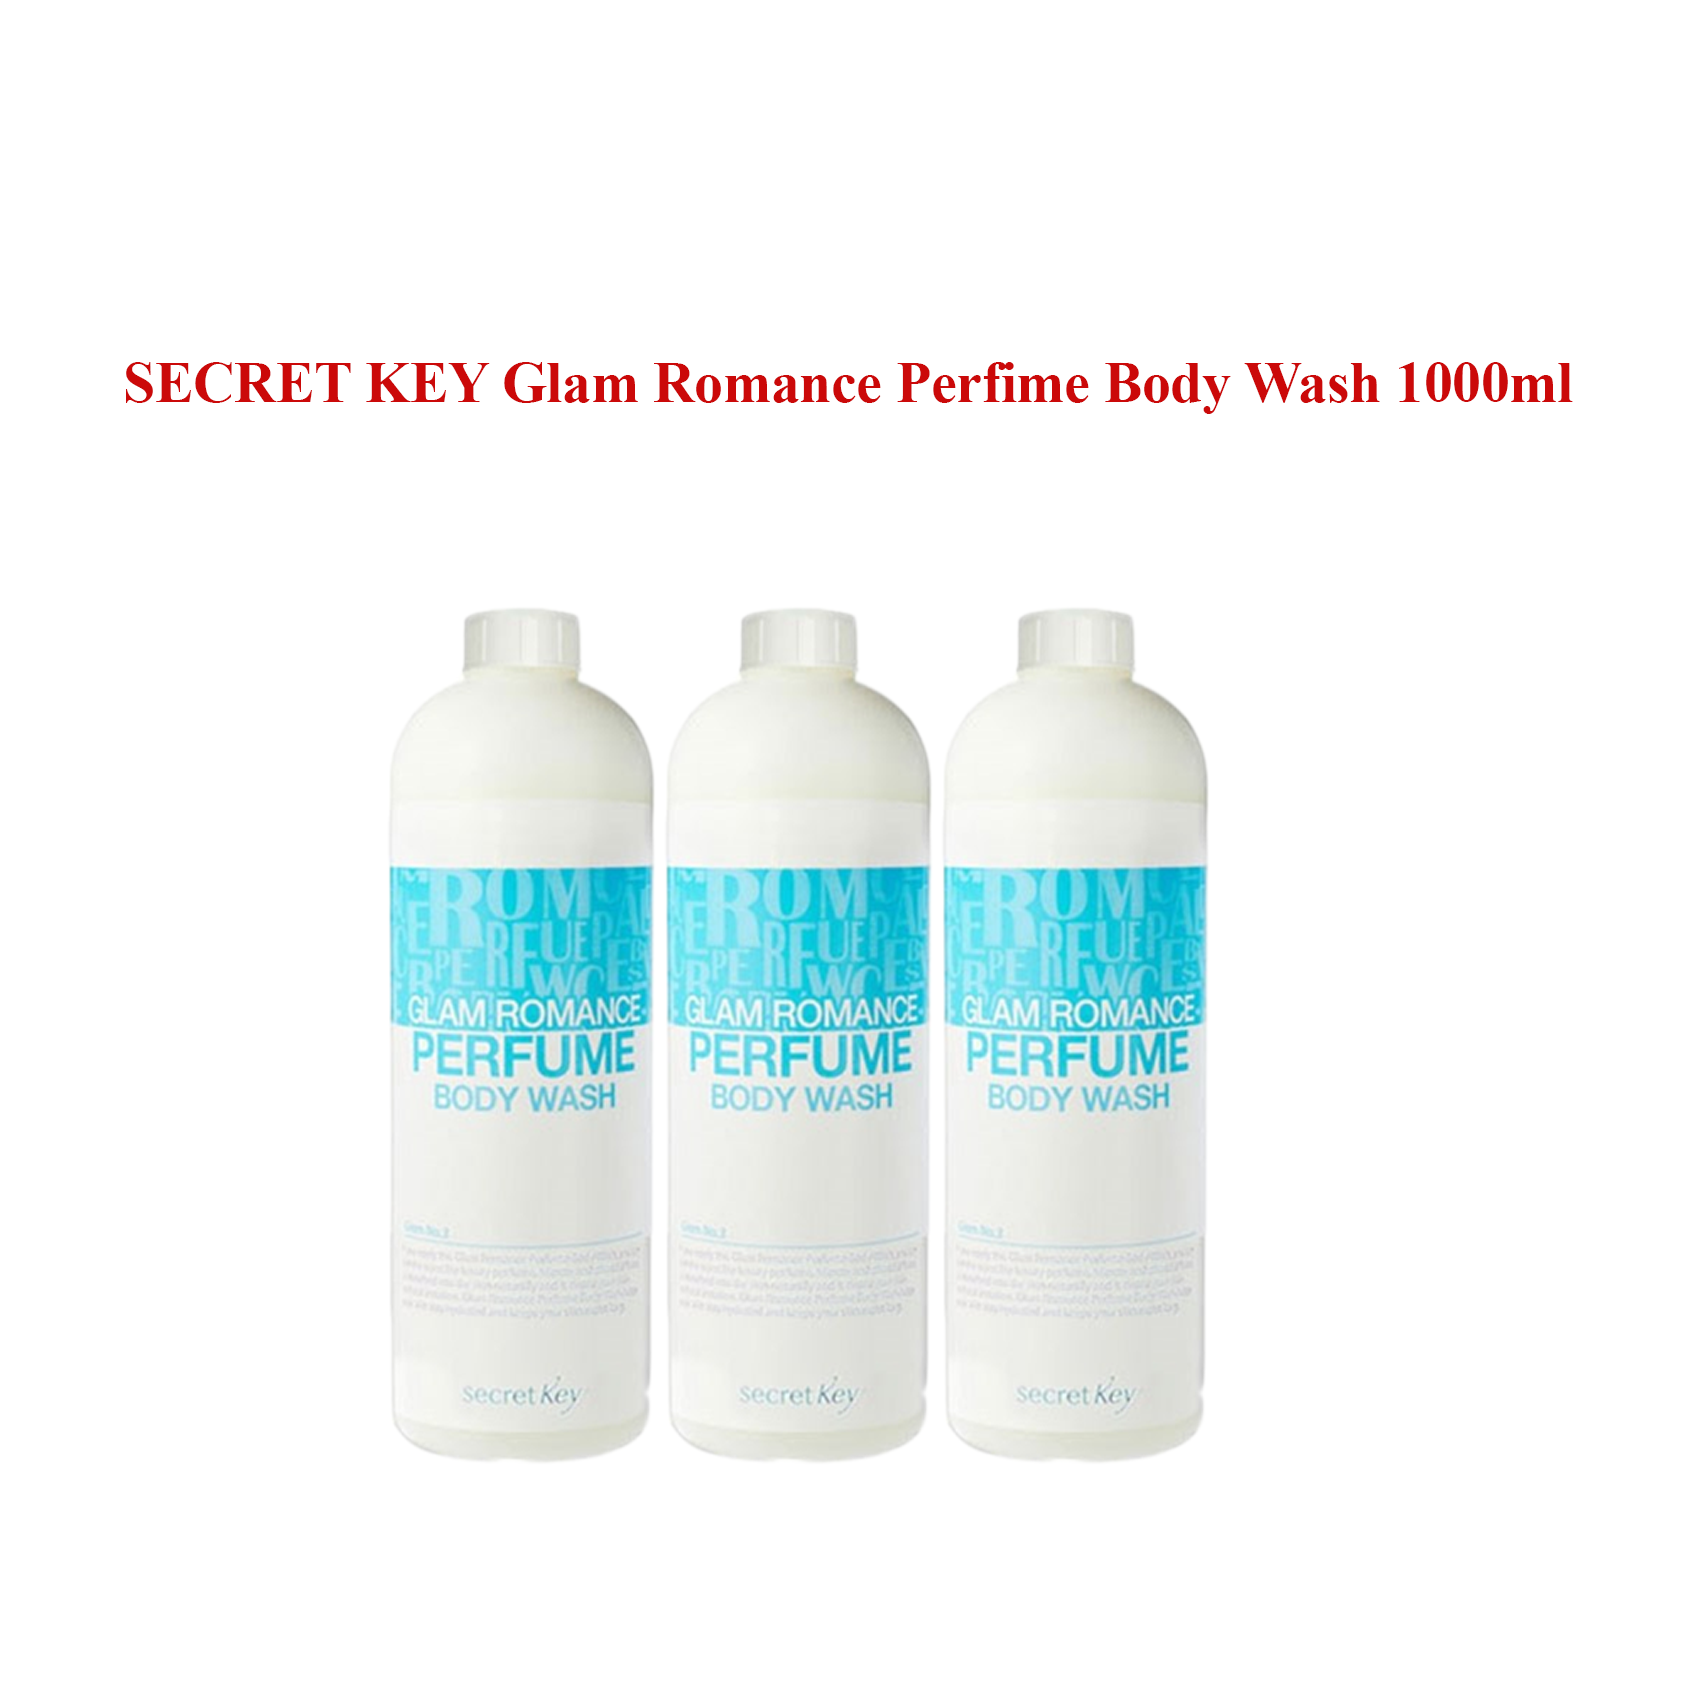 sua-tam-sua-tam-secret-key-glam-romance-perfume-body-wash-1000ml-1055